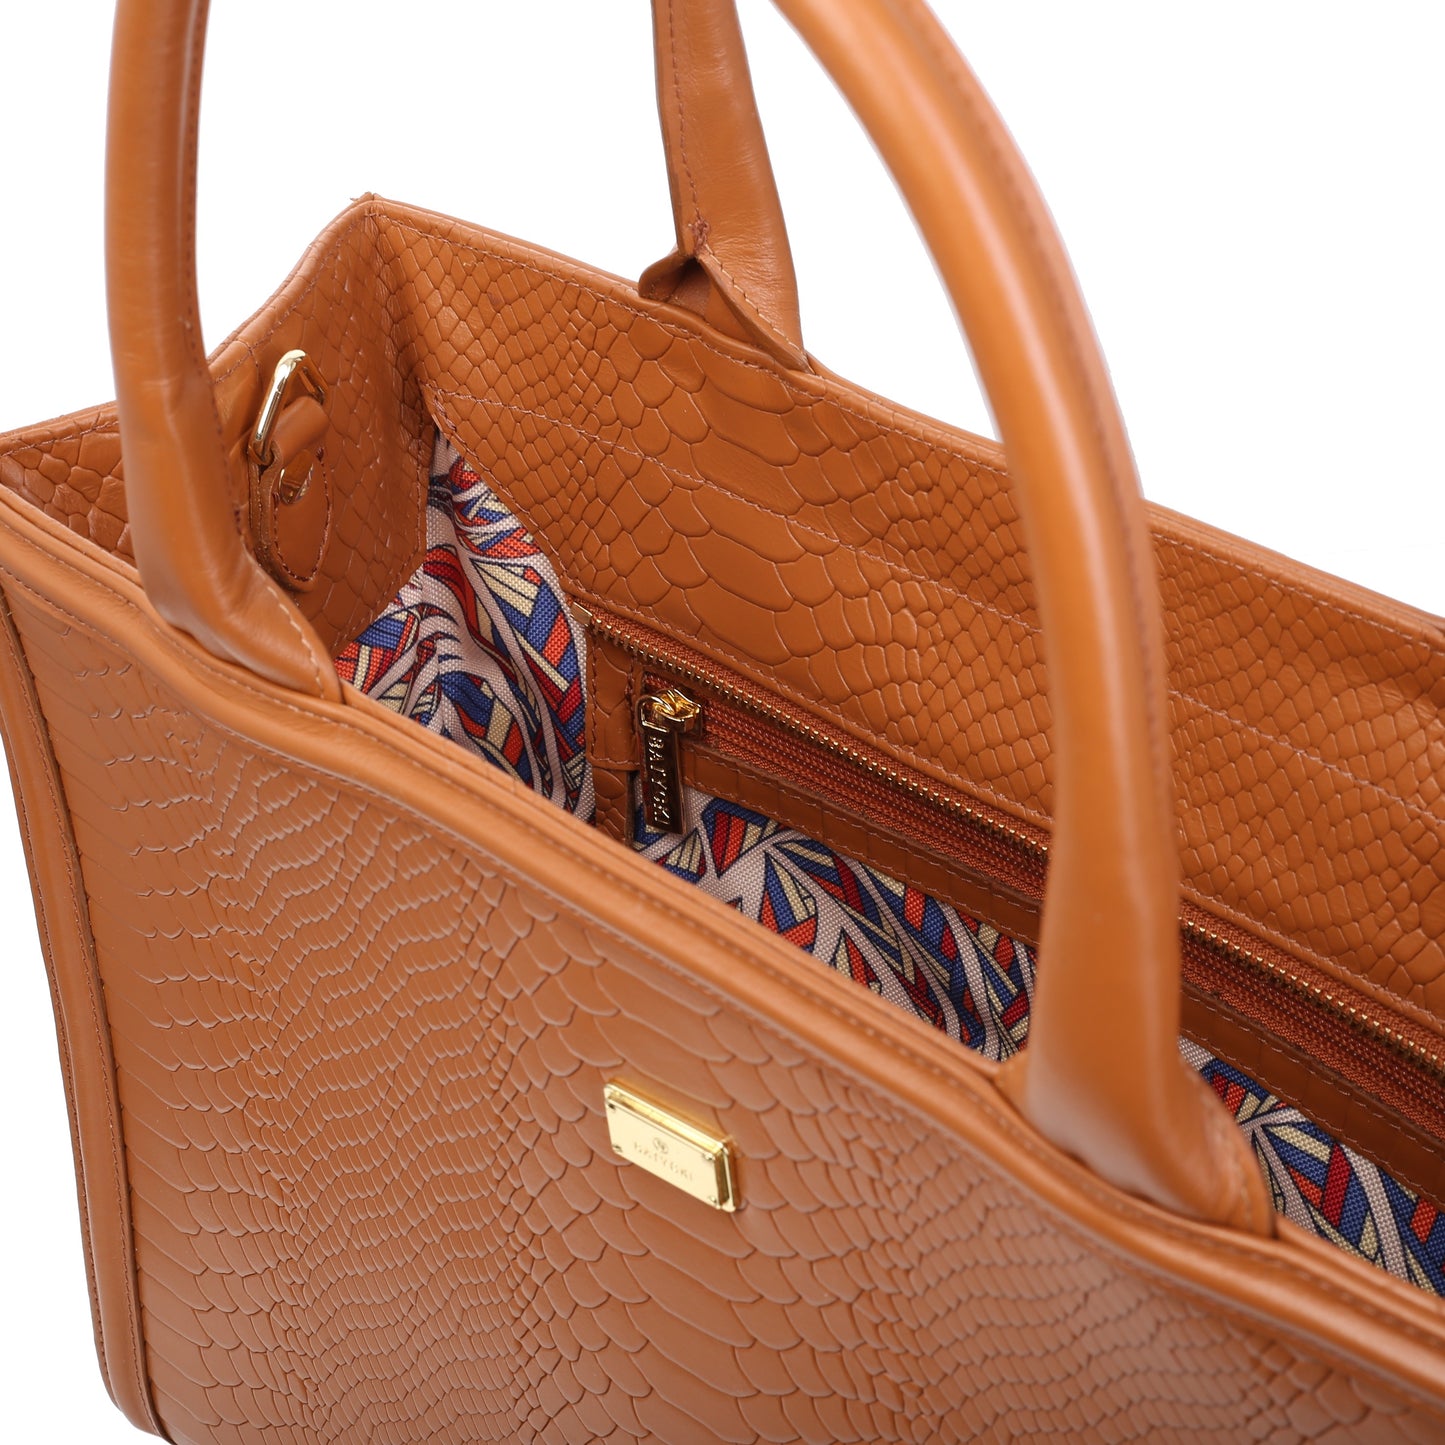 ANA COGNAC women's leather handbag